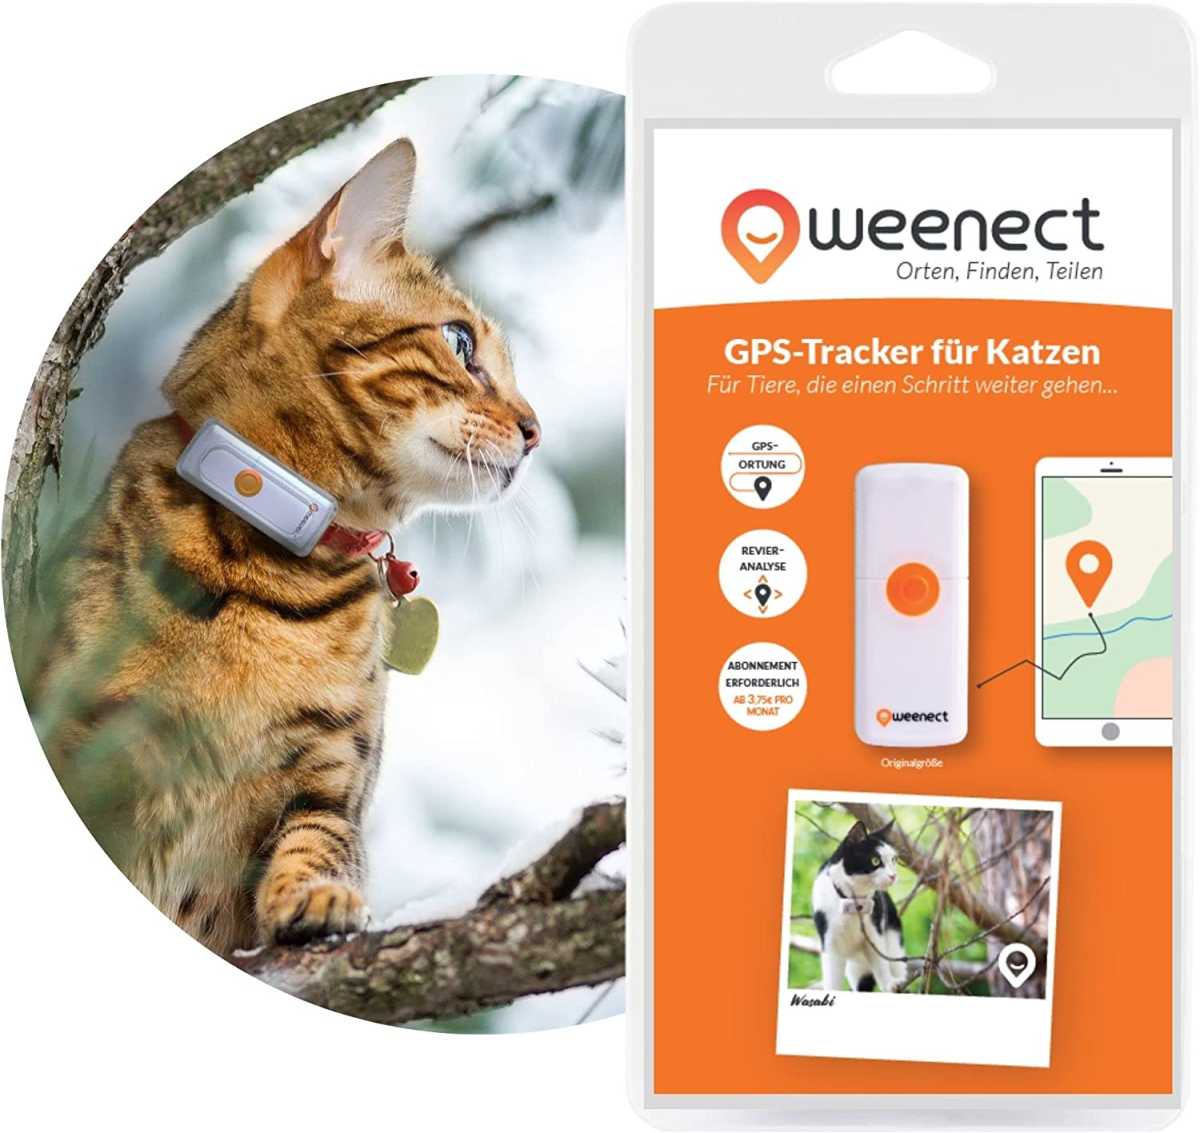 GPS-Tracker for Katzen – Weenect